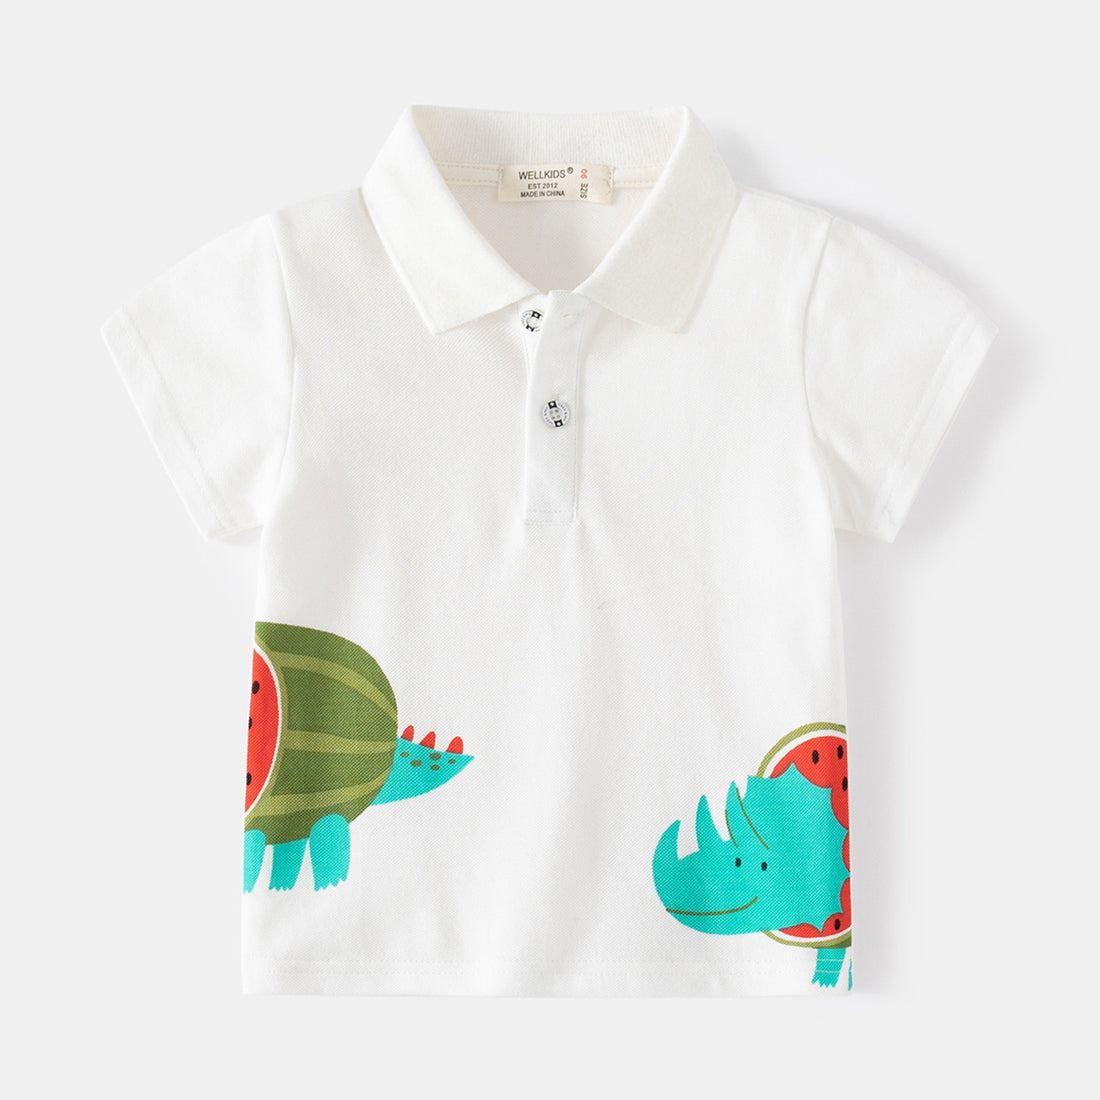 [5131035] - Baju Atasan Kaos Kerah Polo Fashion Import Anak Laki-Laki - Motif Dino Fruit